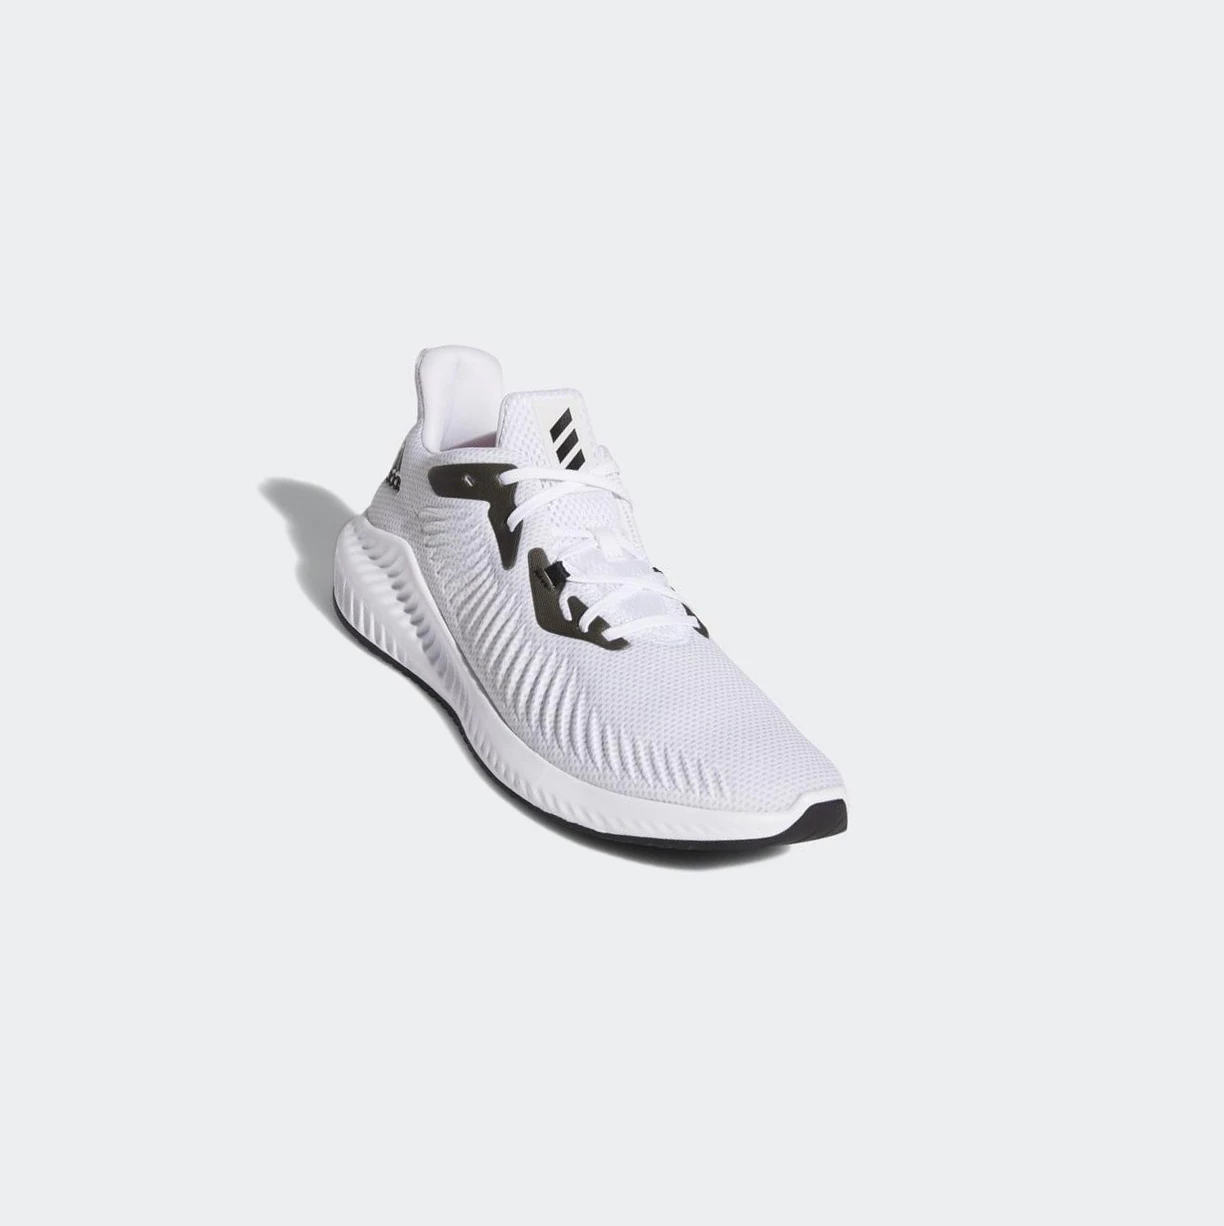 Bezecke Topanky Adidas Alphabounce+ Panske Biele | 205SKICUTSJ